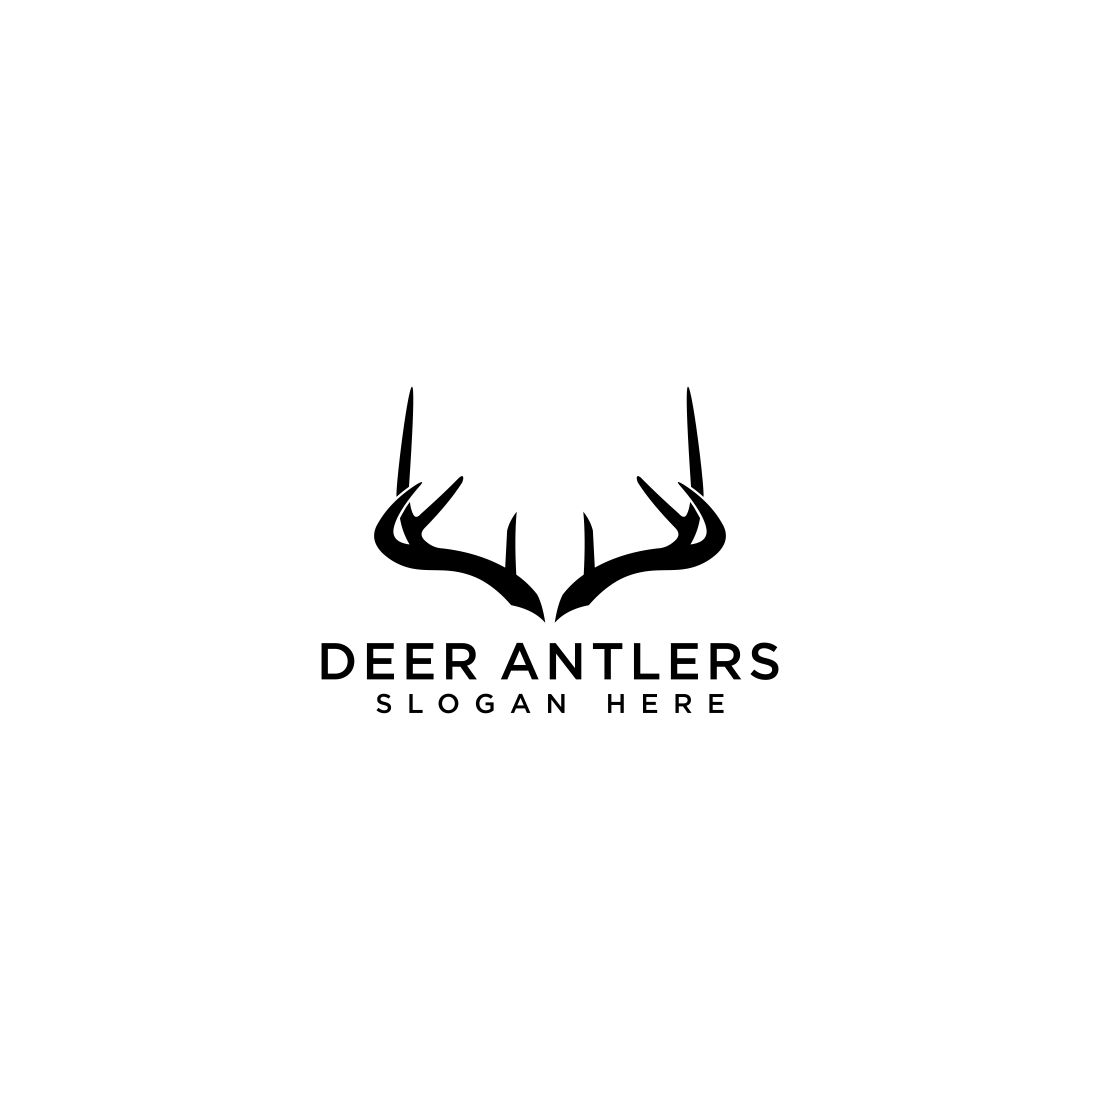 deer antlers vecot design preview image.